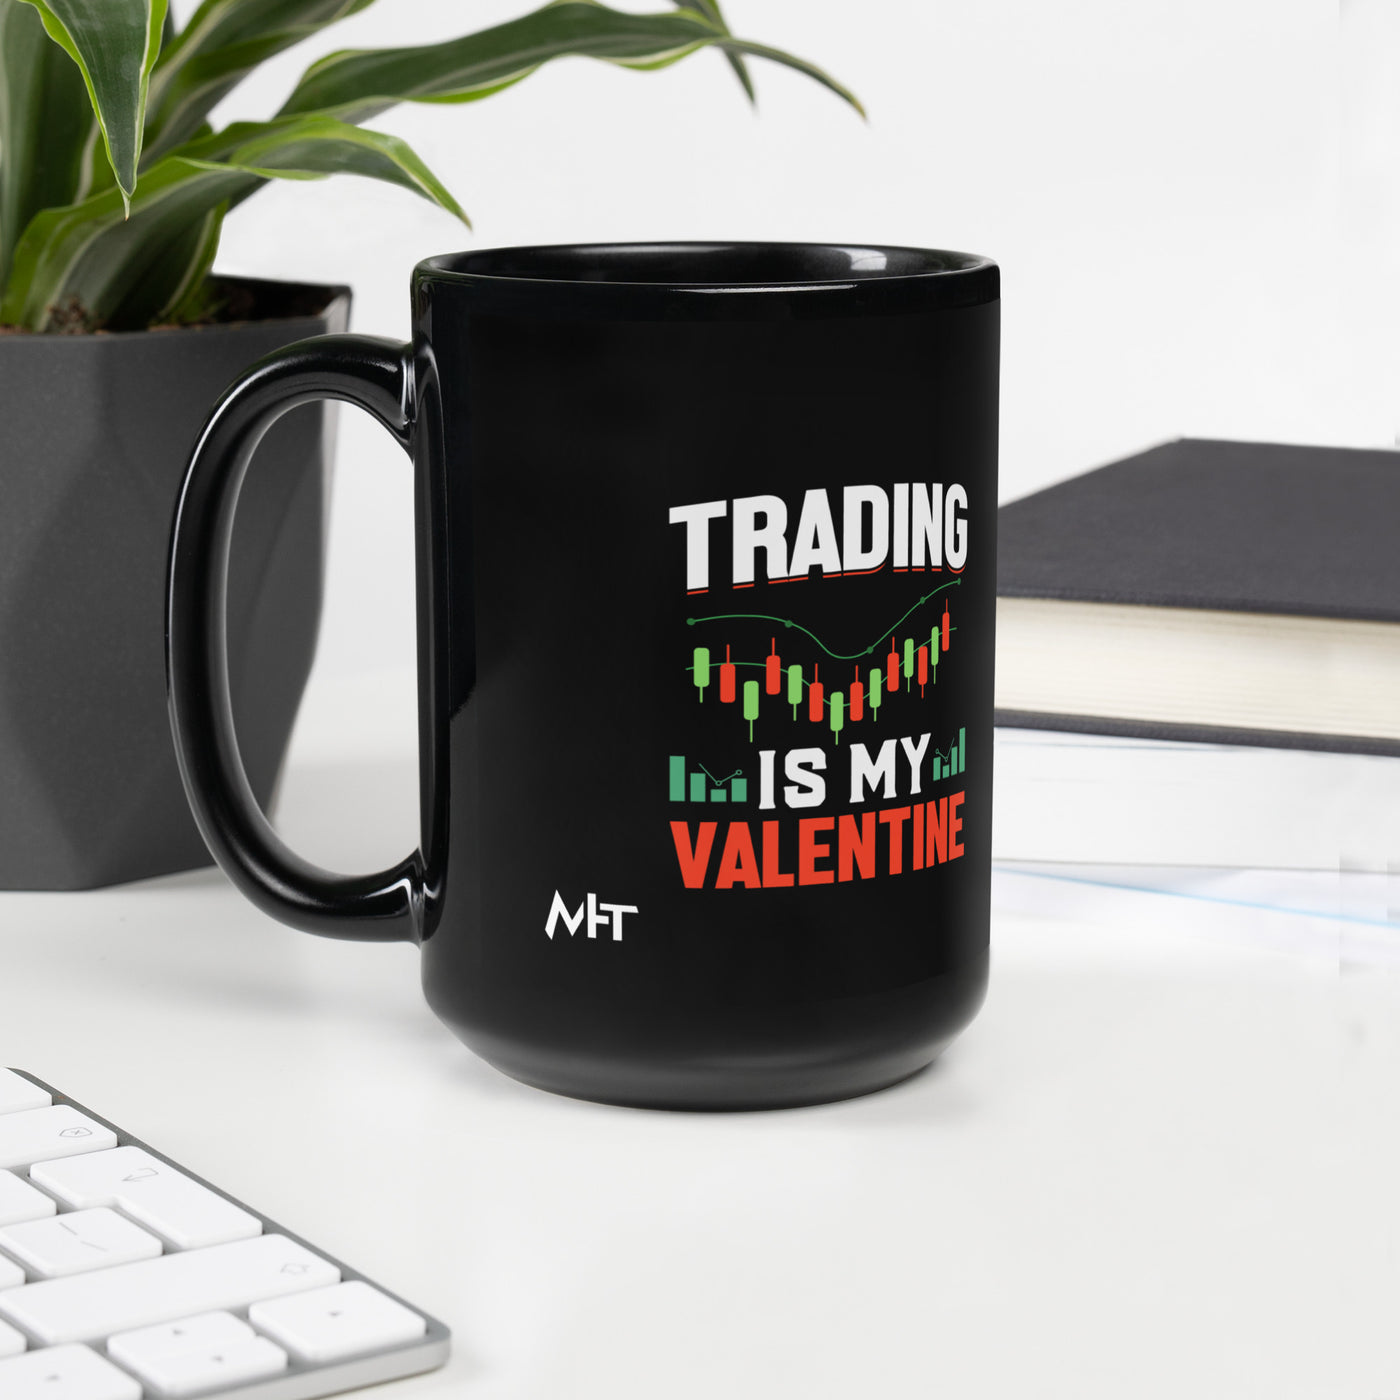 Trading is my Valentine - Black Glossy Mug